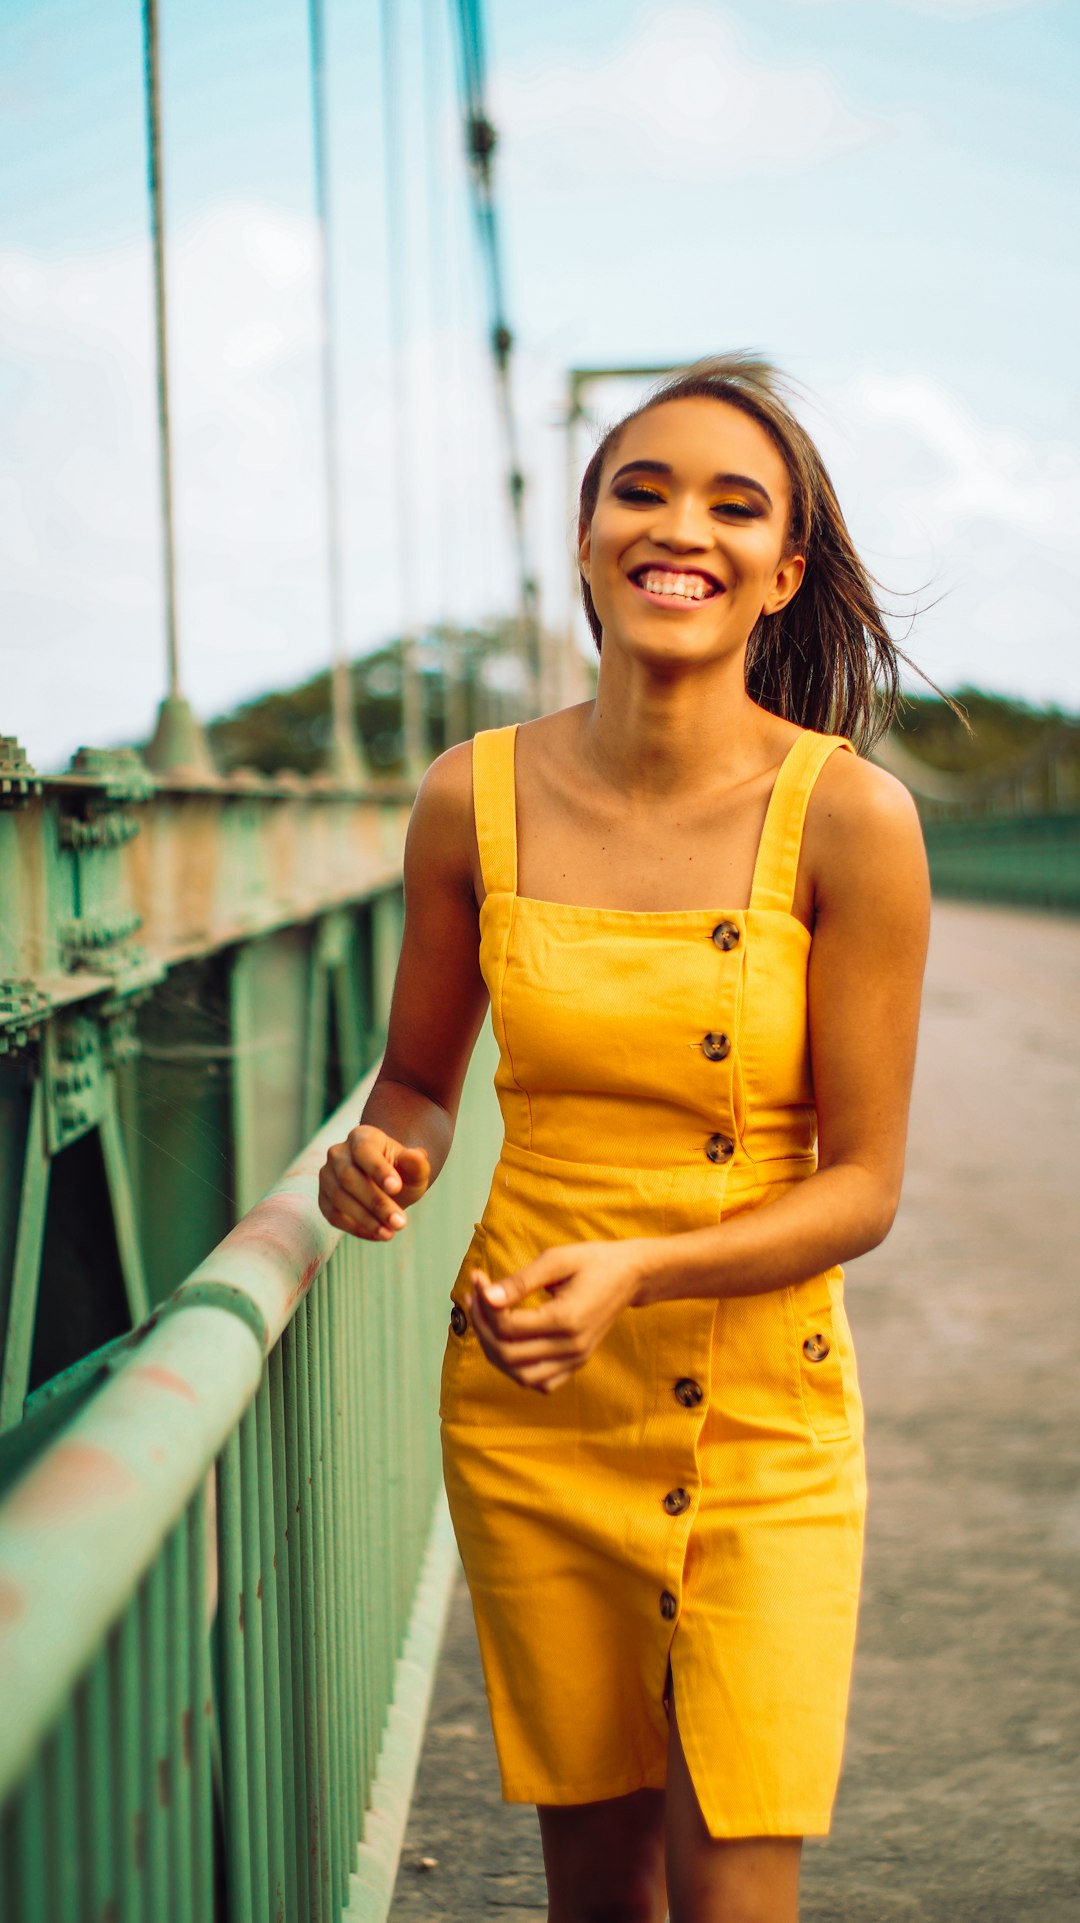 woman in yellow tank dress smiling